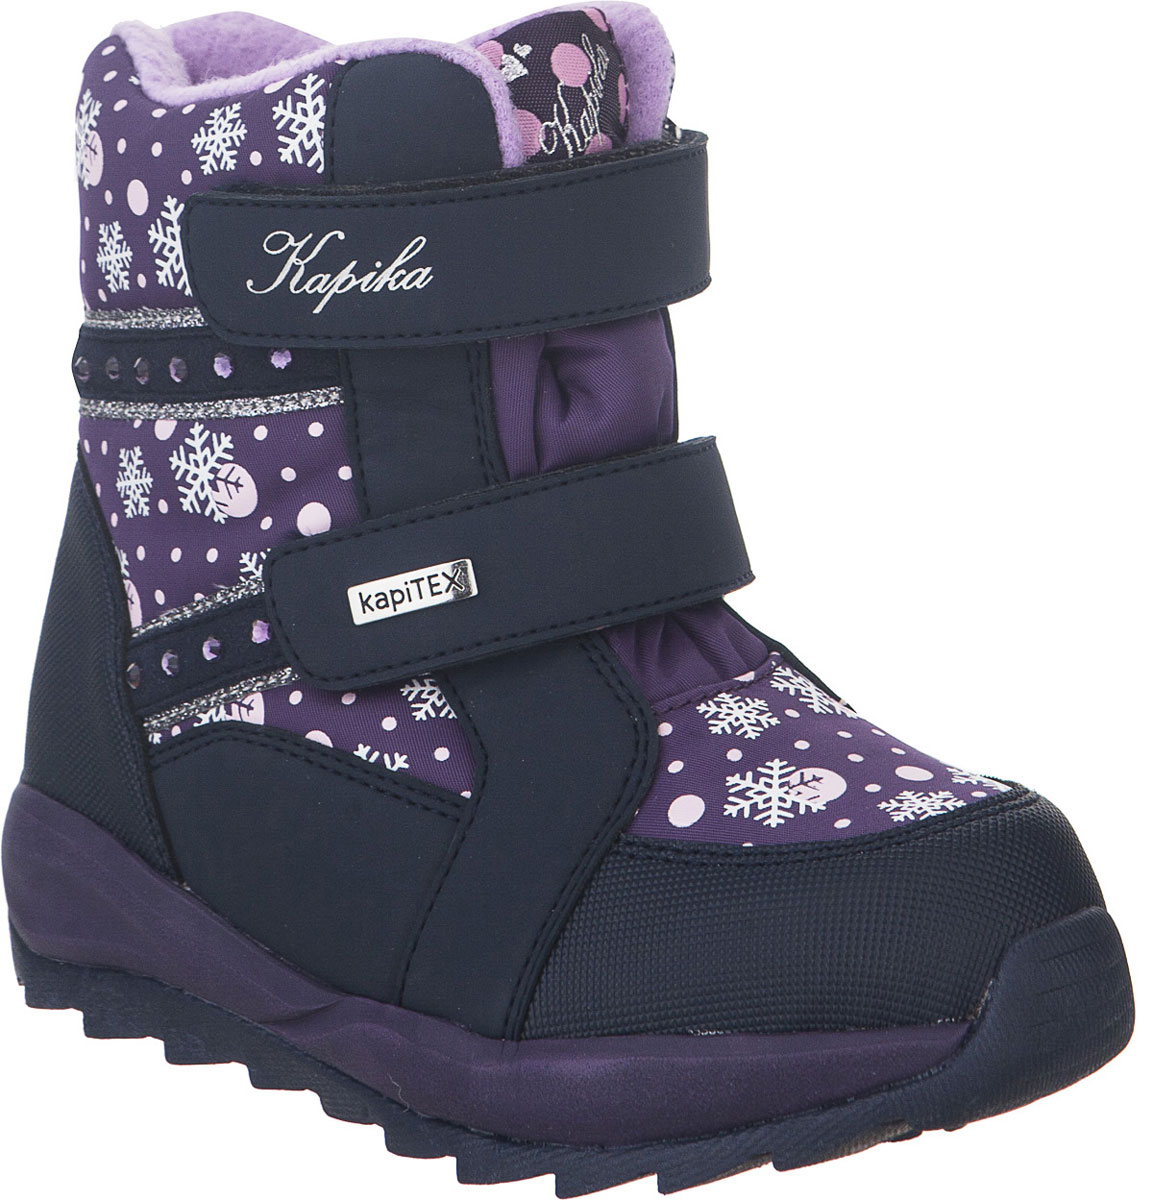 Ботинки для девочки Kapika, цвет: фиолетовый, темно-синий. 42240-2. Размер 29